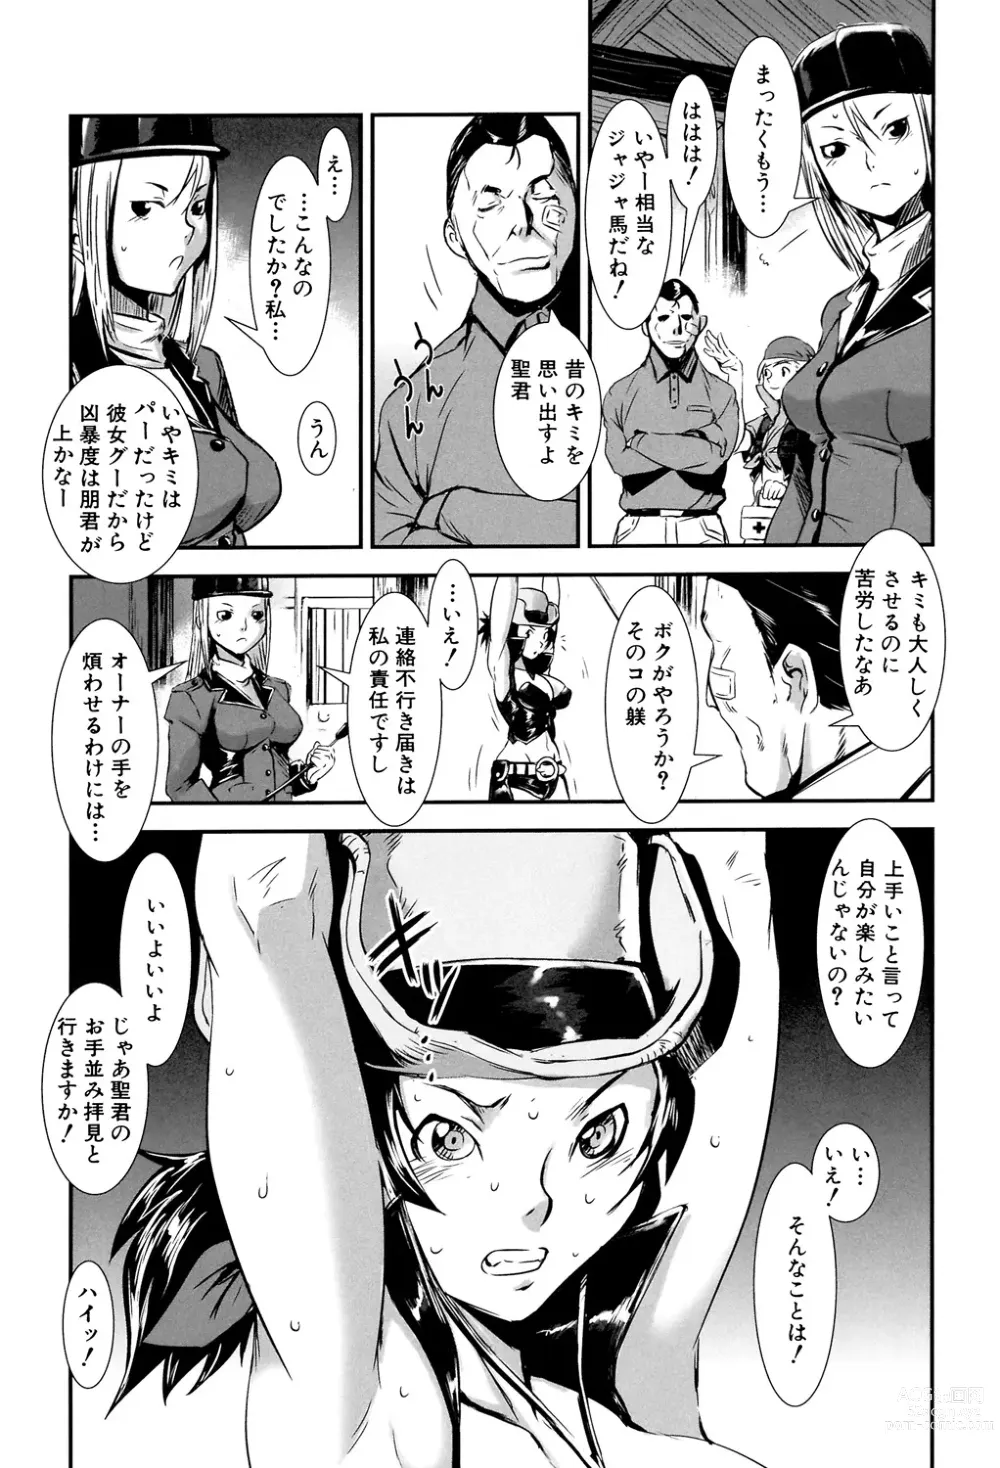 Page 11 of manga MAS HOLic